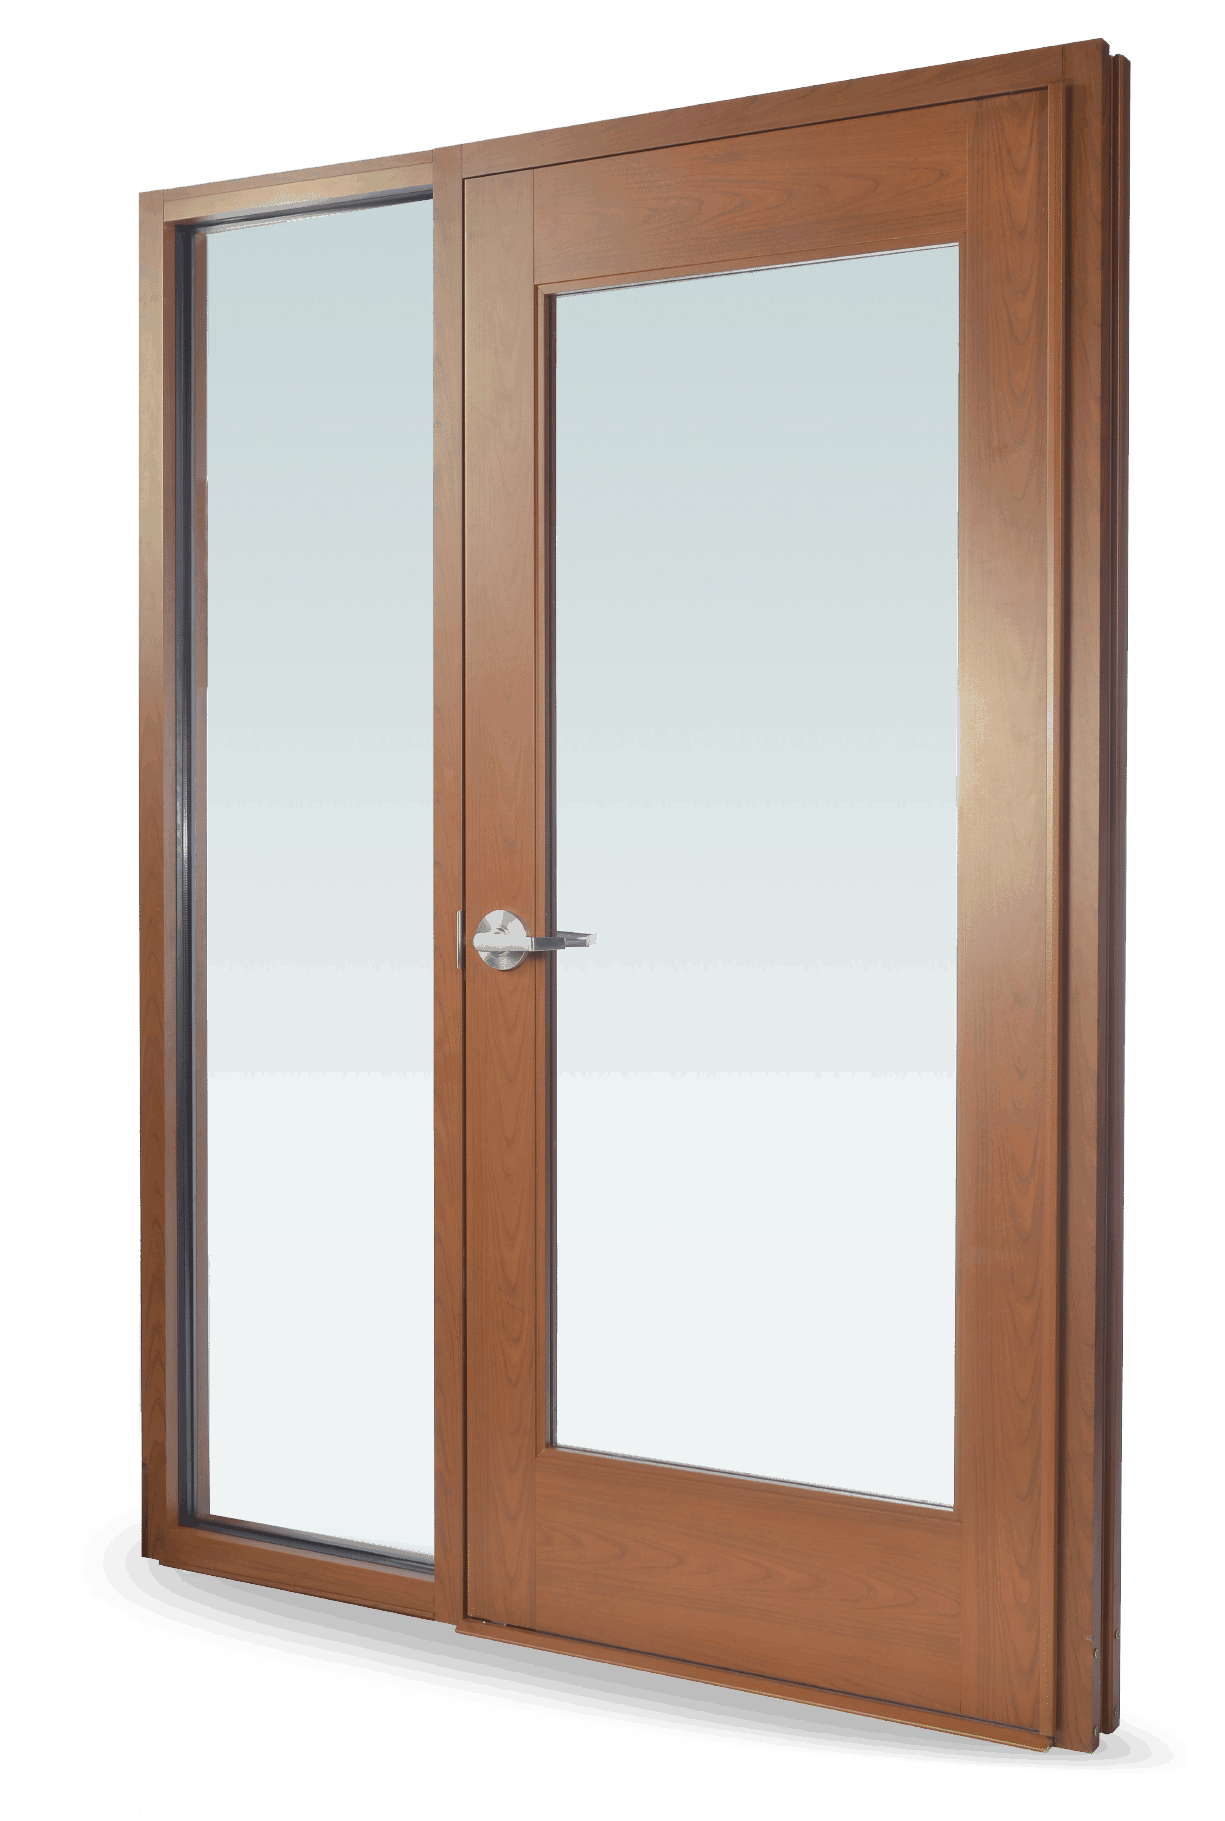 A SL-15 wooden door featuring a glass panel.